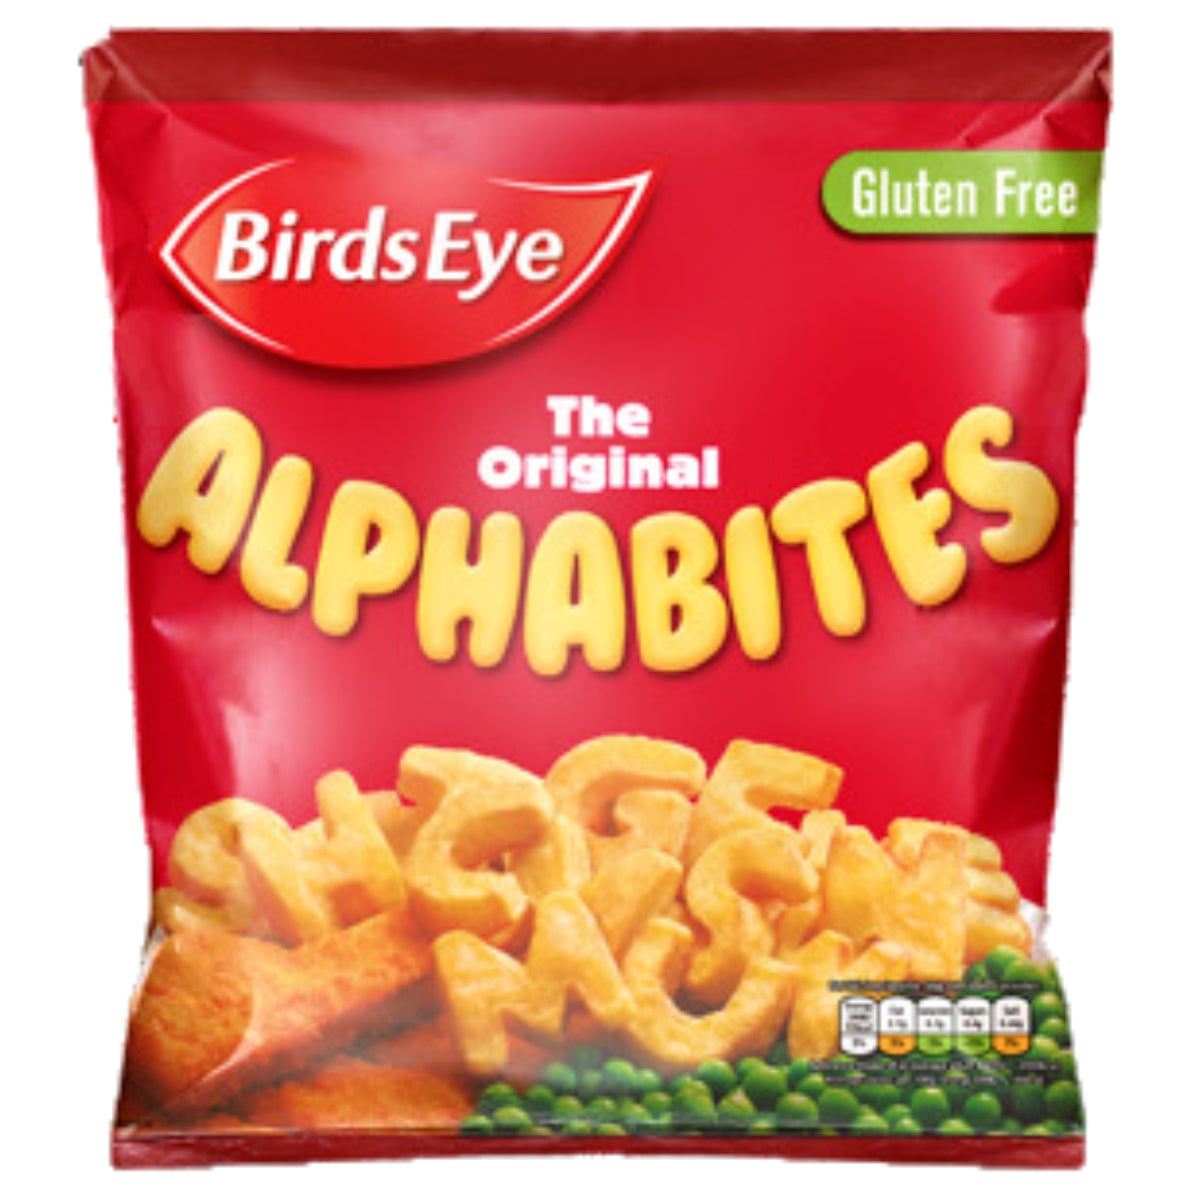 A bag of Birds Eye Alphabites - 456g.